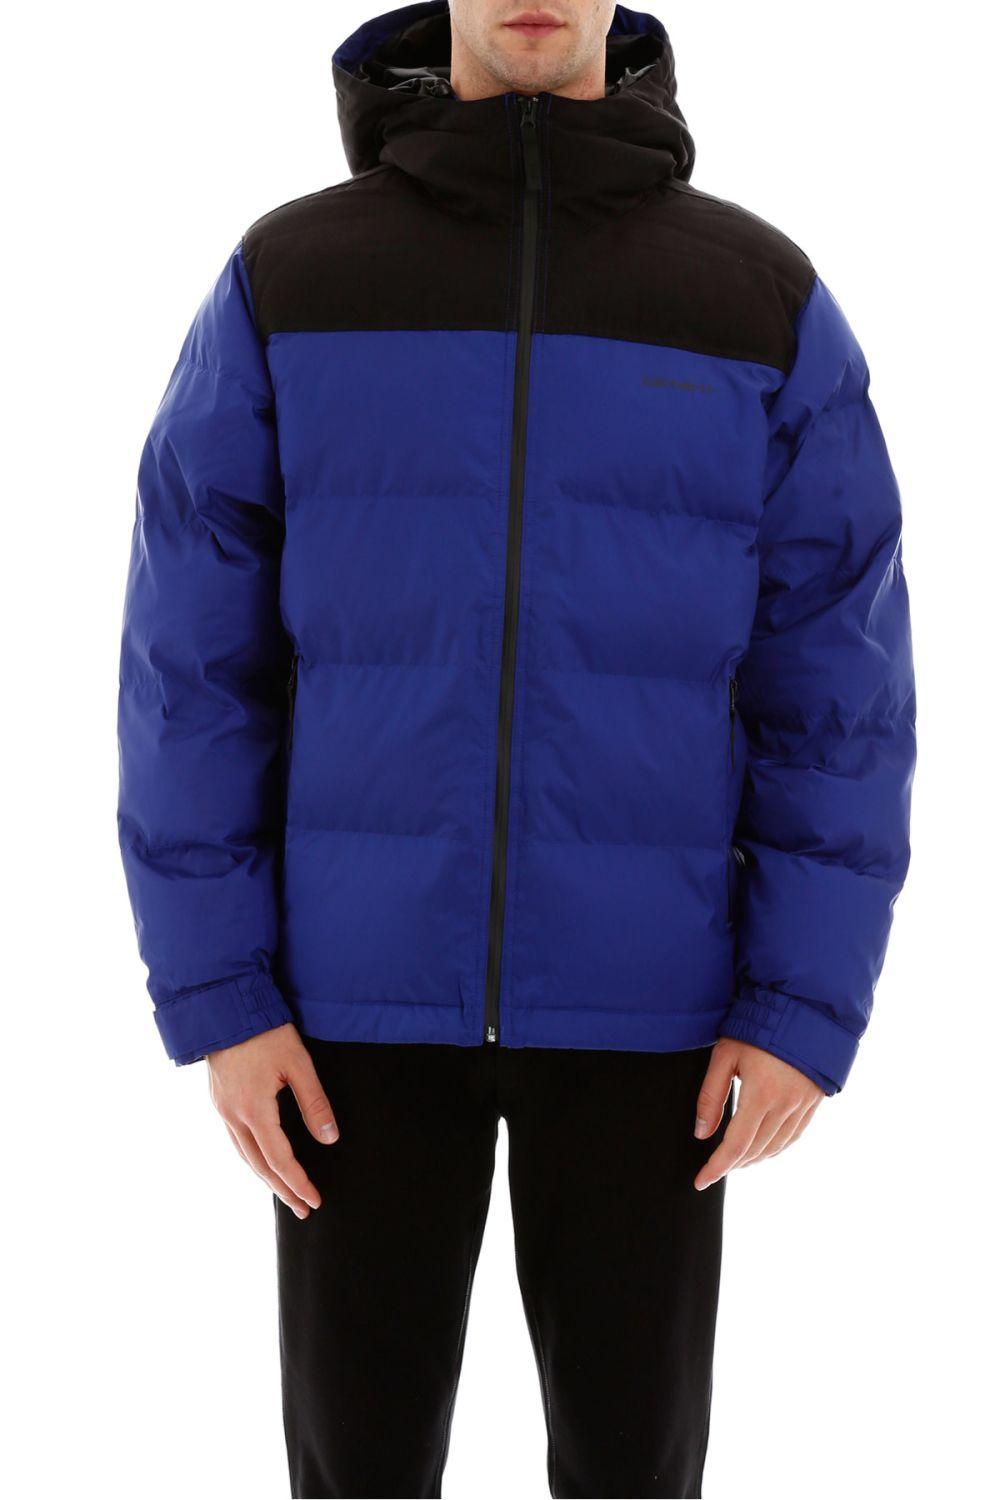 Carhartt Synthetic Larsen Puffer Jacket in Blue,Black (Blue) for Men - Lyst